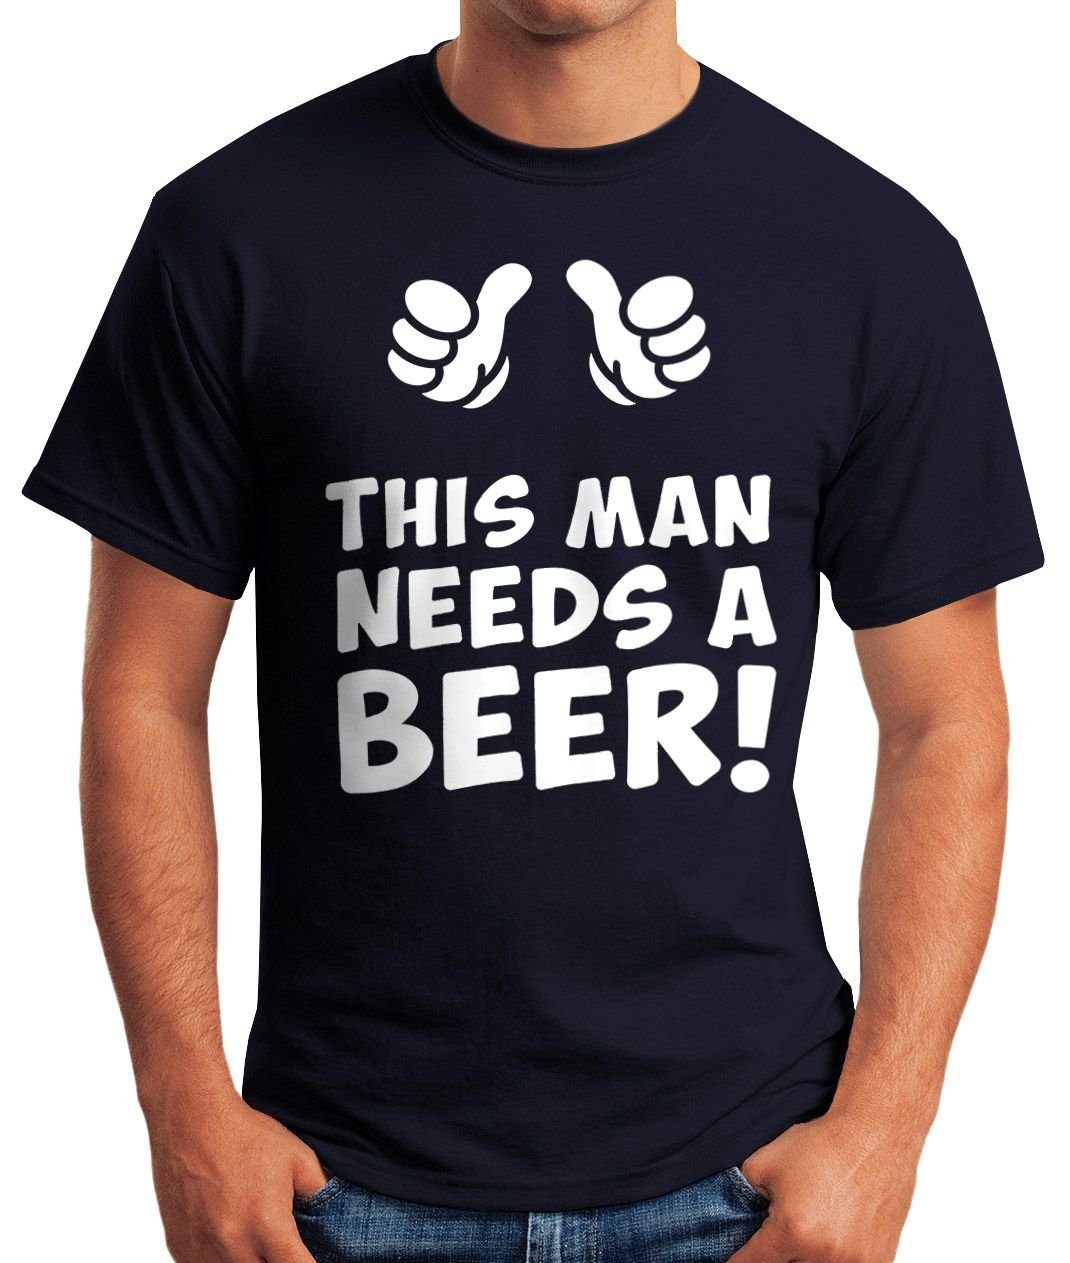 Print-Shirt Bier beer man This Moonworks® Print T-Shirt mit navy MoonWorks Herren a needs